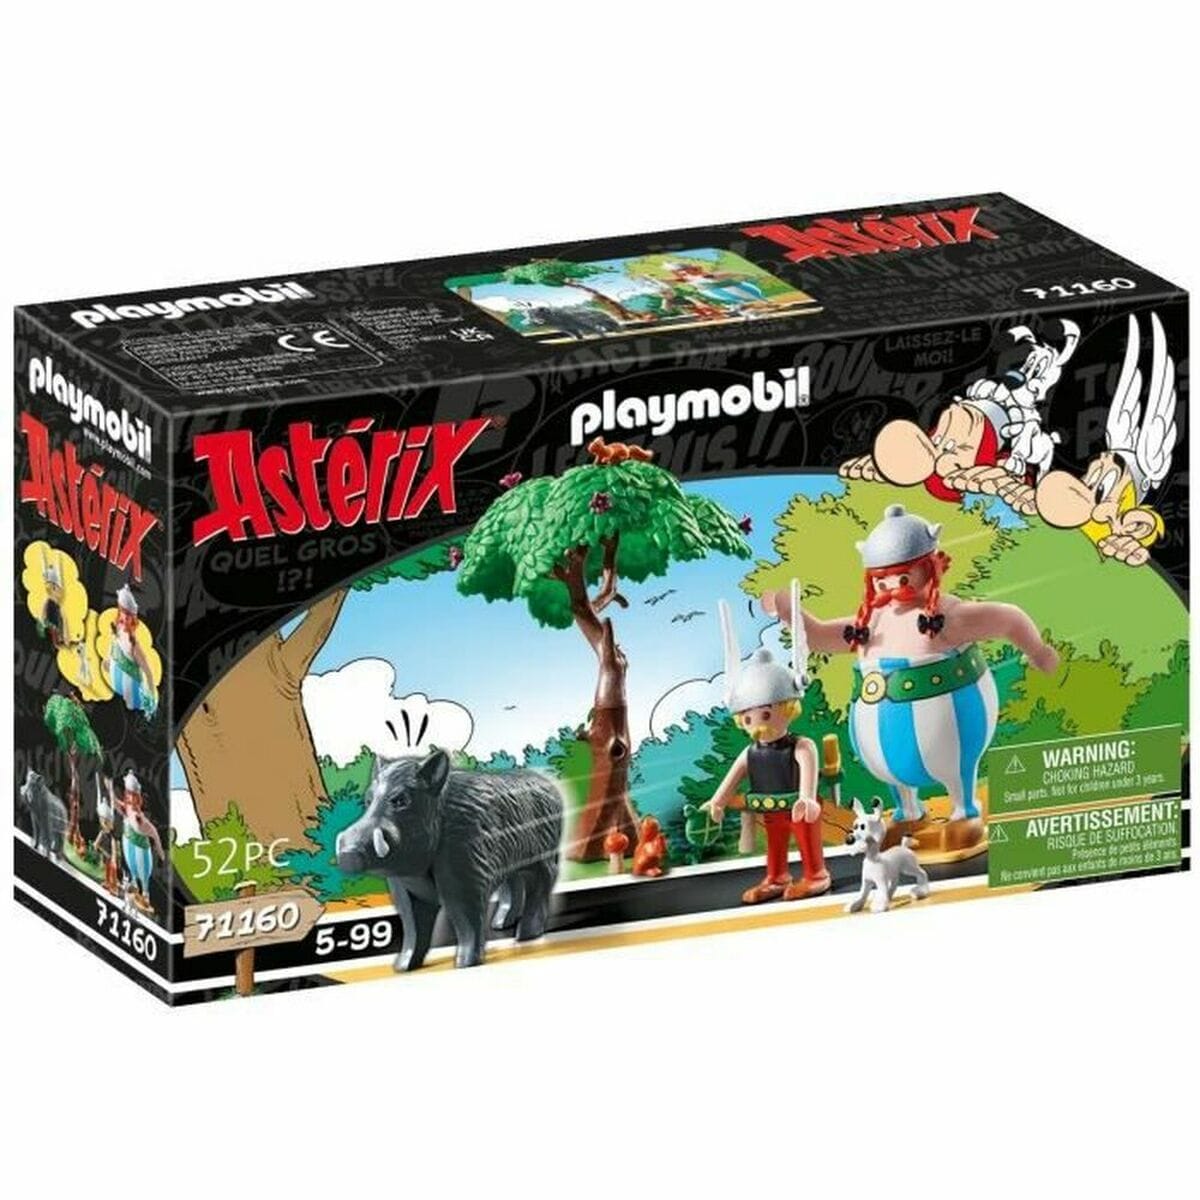 Playmobil Spielzeug | Kostüme > Spielzeug und Spiele > Brettspiele für Kinder Playset Playmobil Asterix